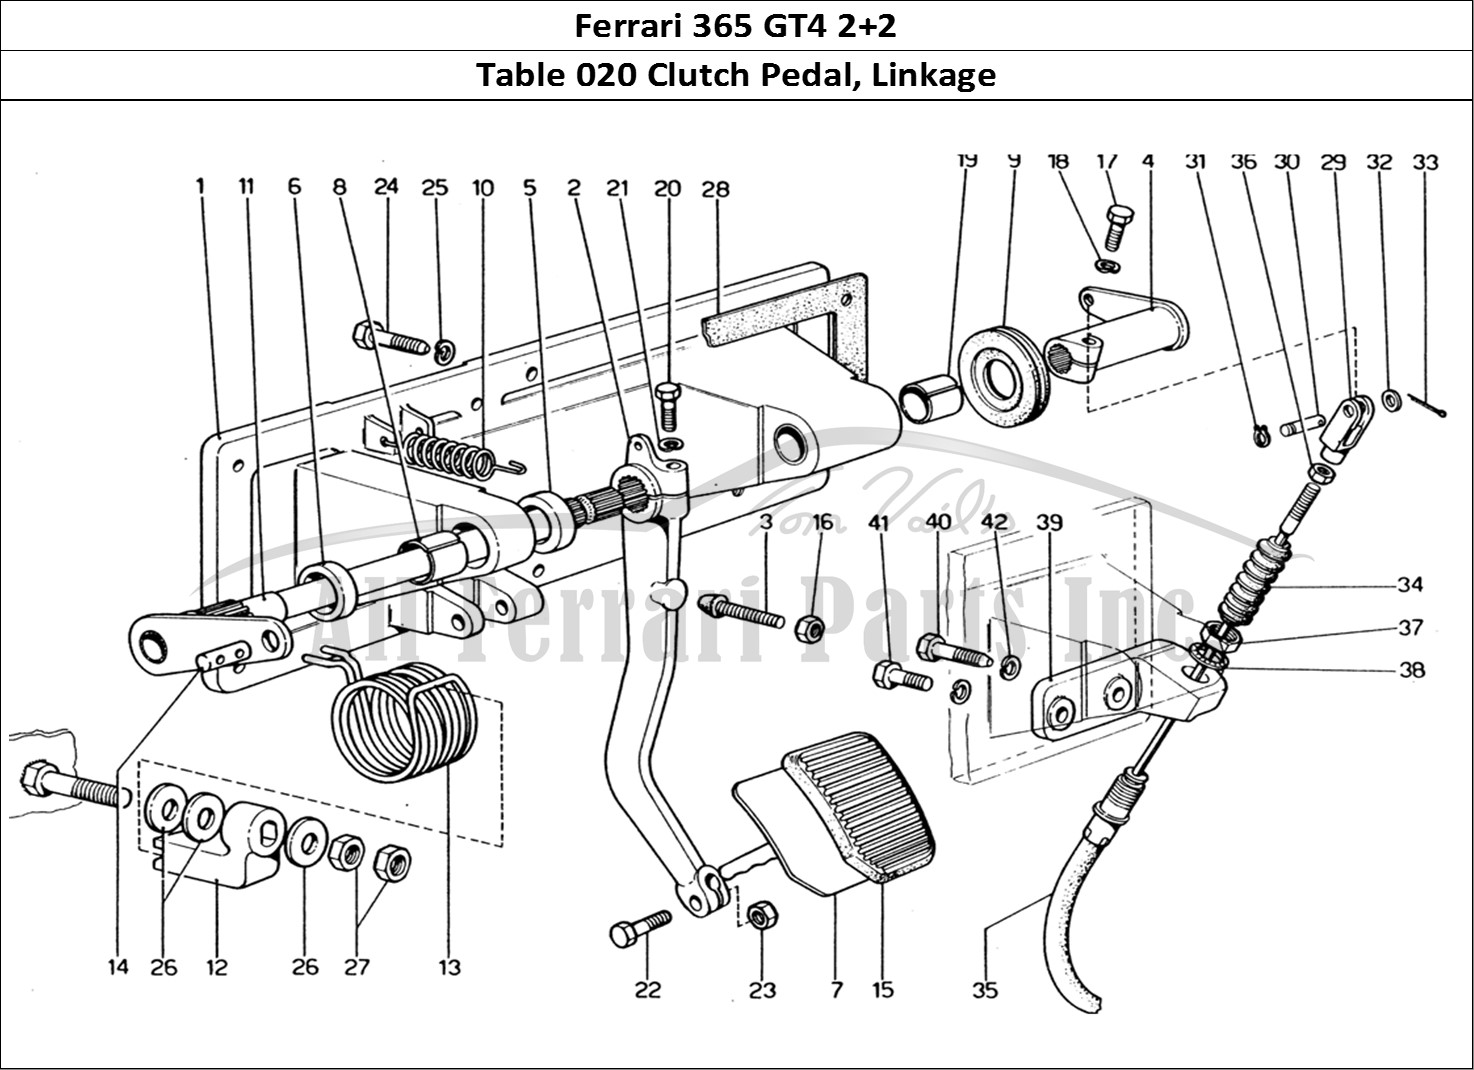 Ferrari Parts Ferrari 365 GT4 2+2 (1973) Page 020 Pedal Board - Clutch Cont